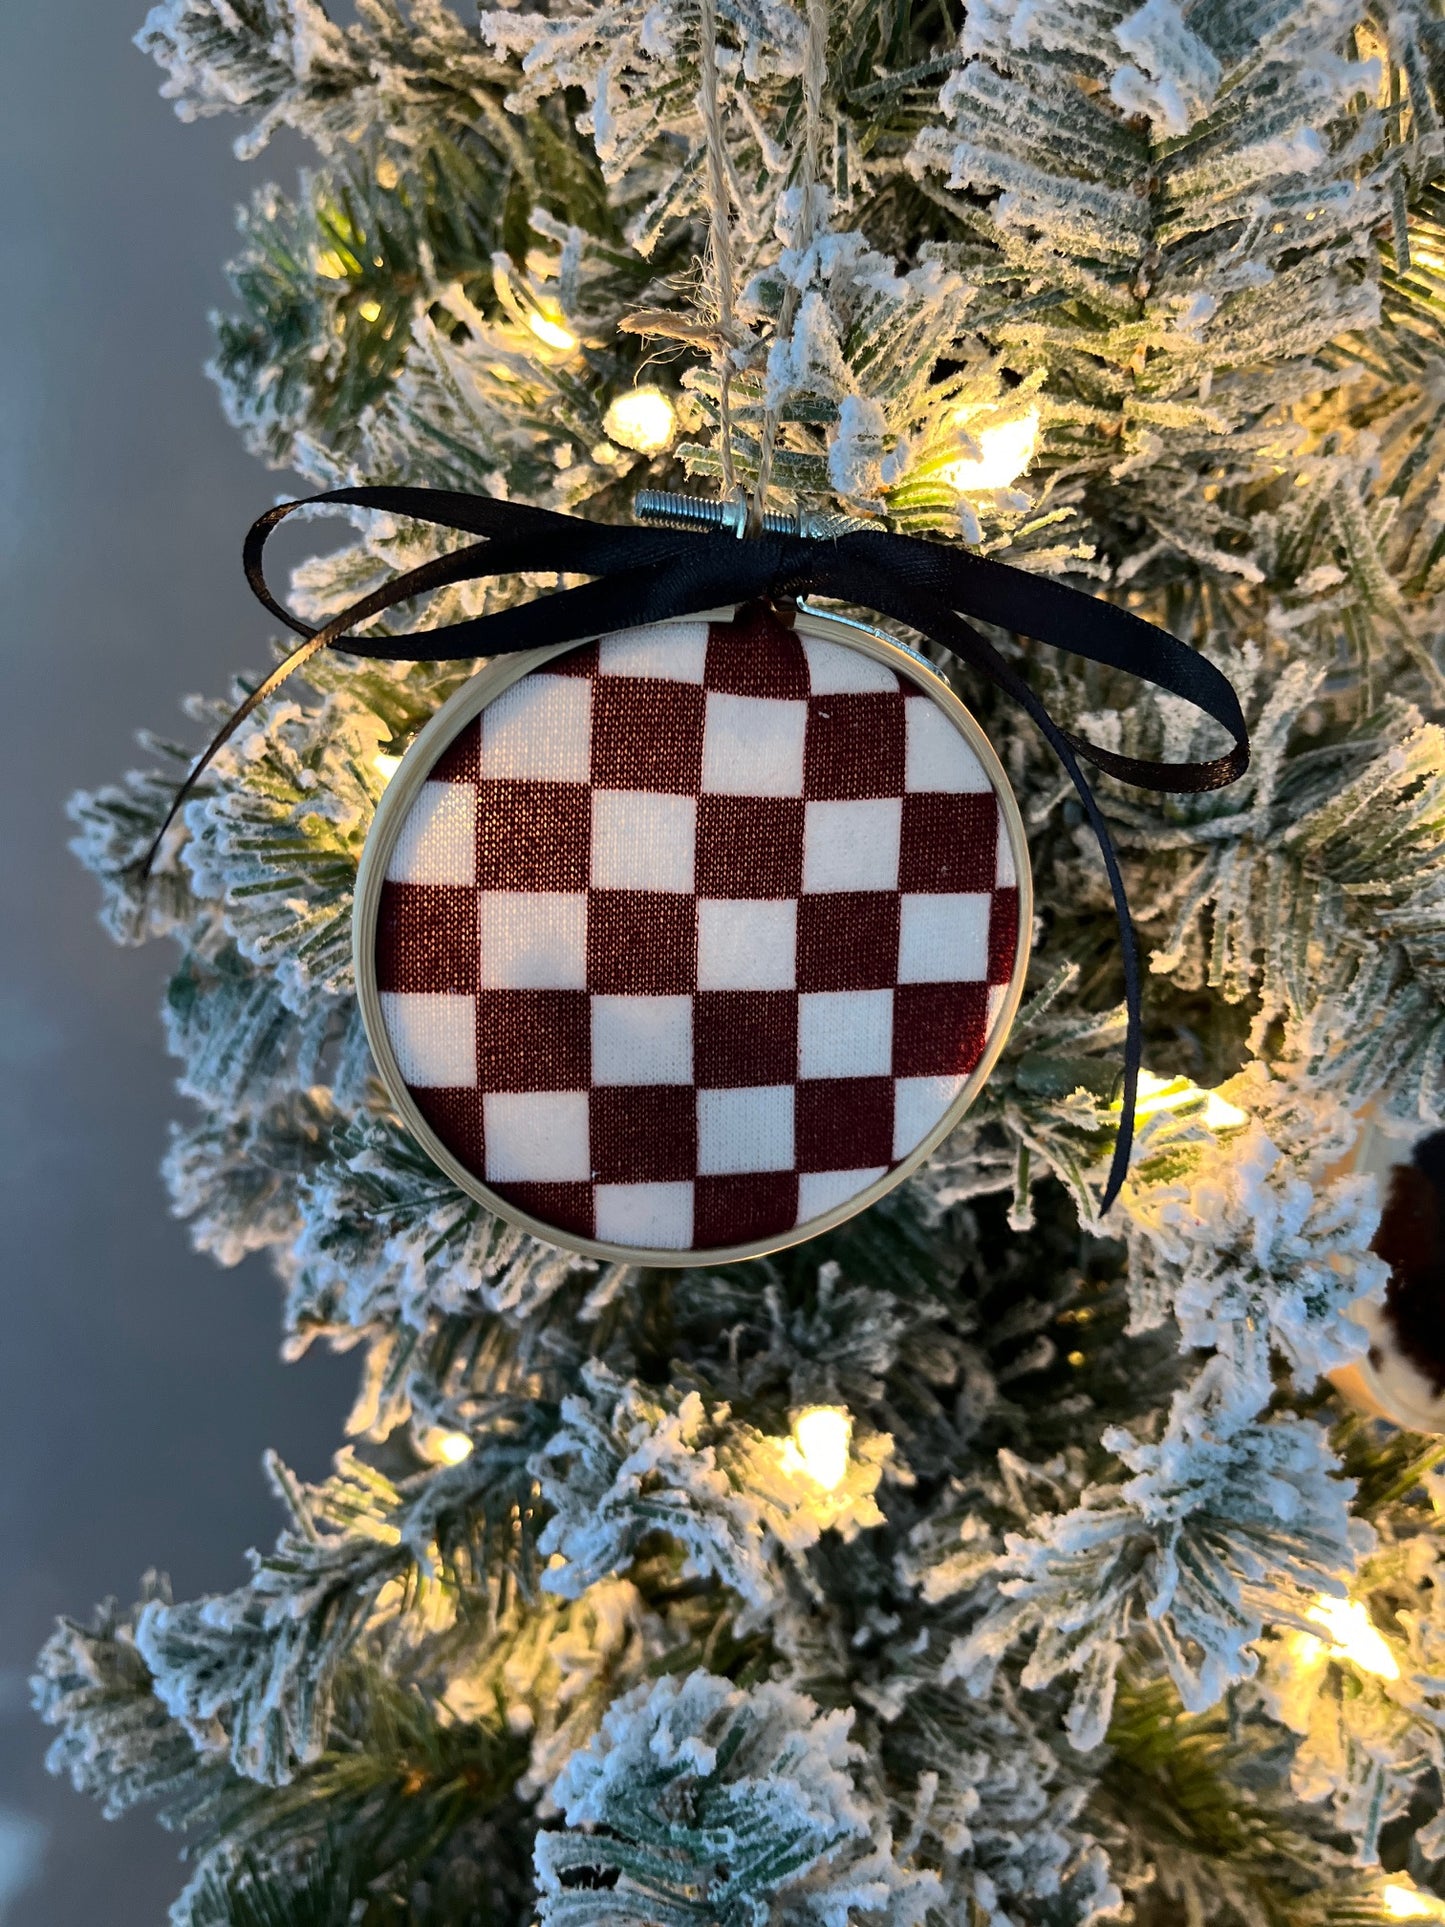 Checkered Ornaments